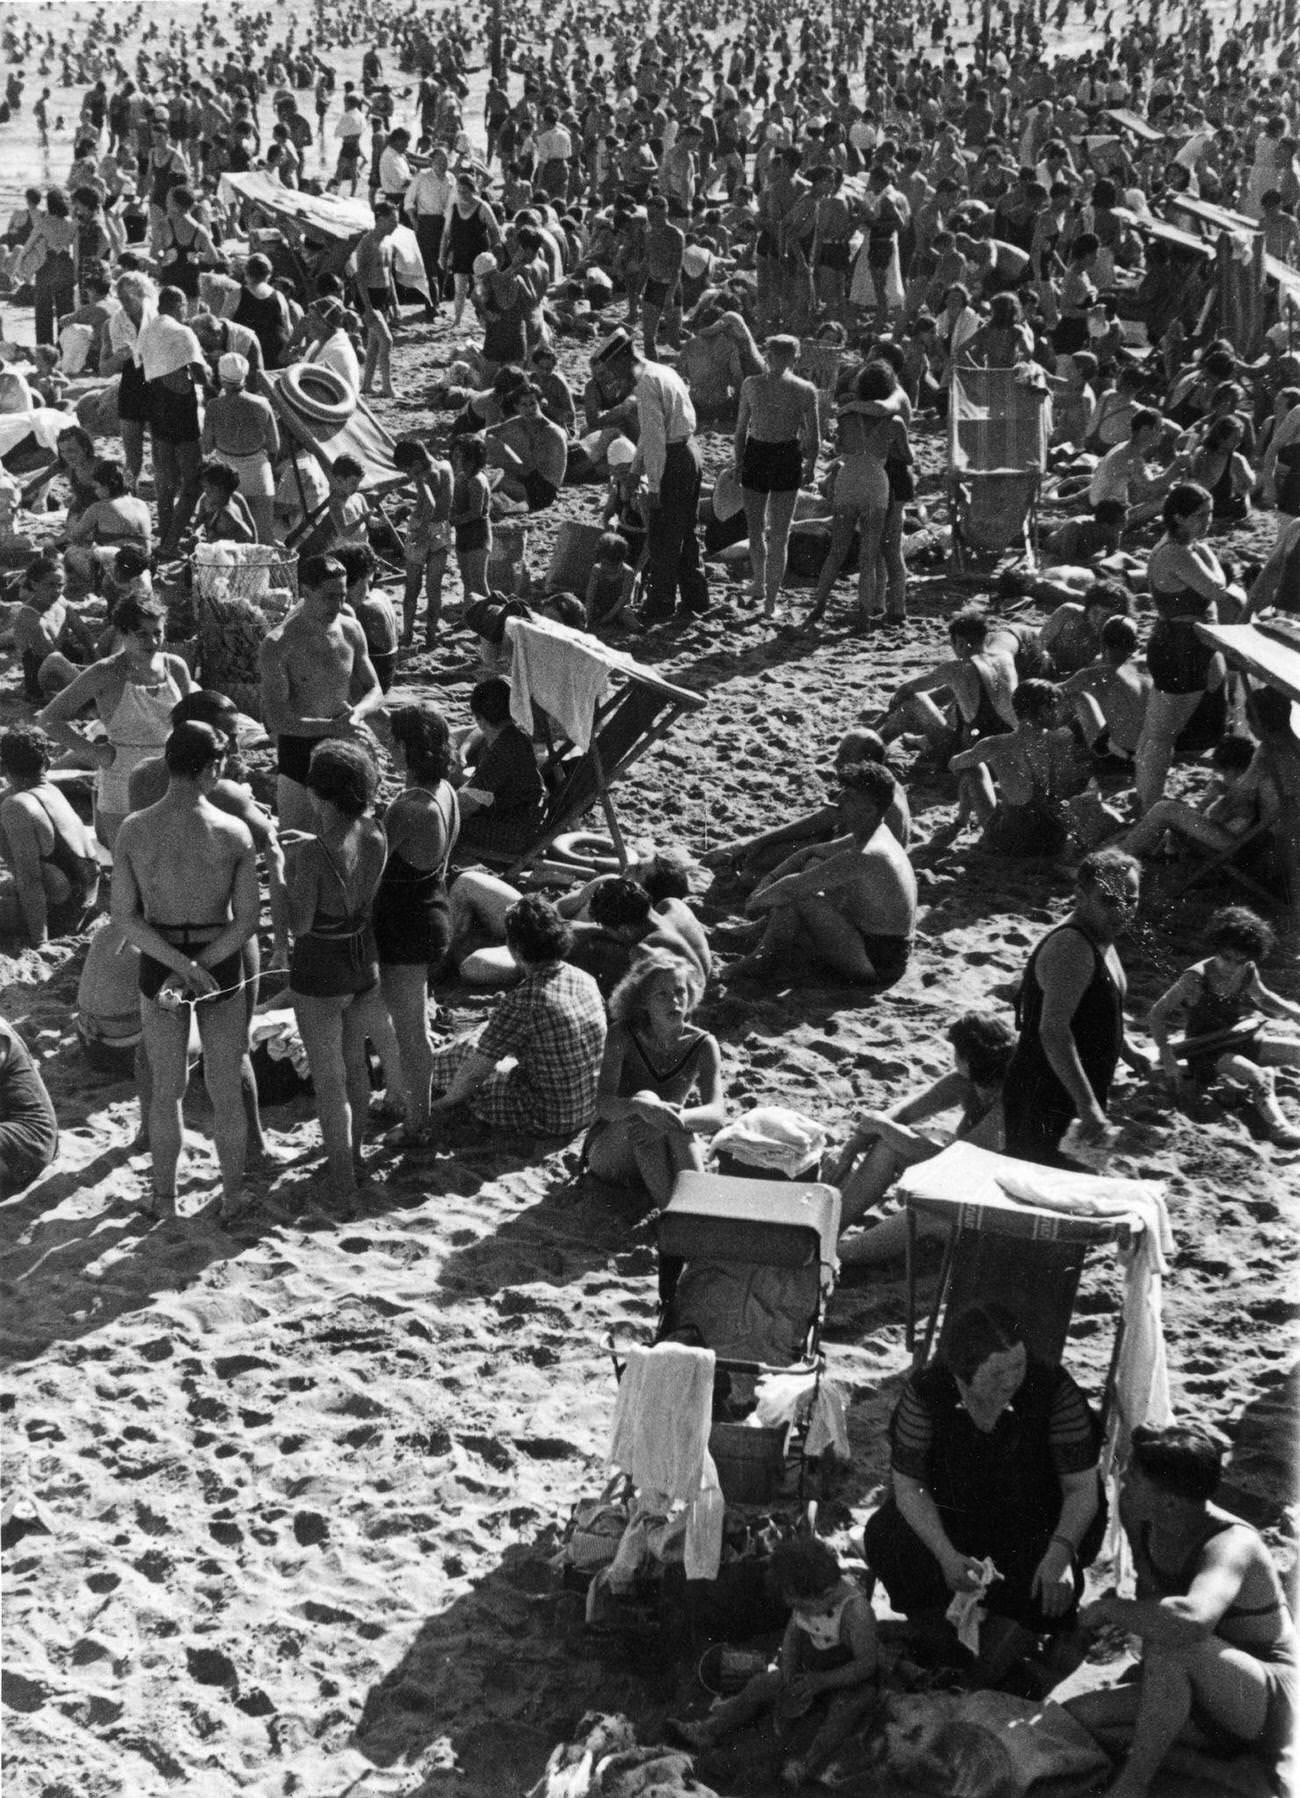 Sunbathing Crowds At Coney Island Beach, 1930